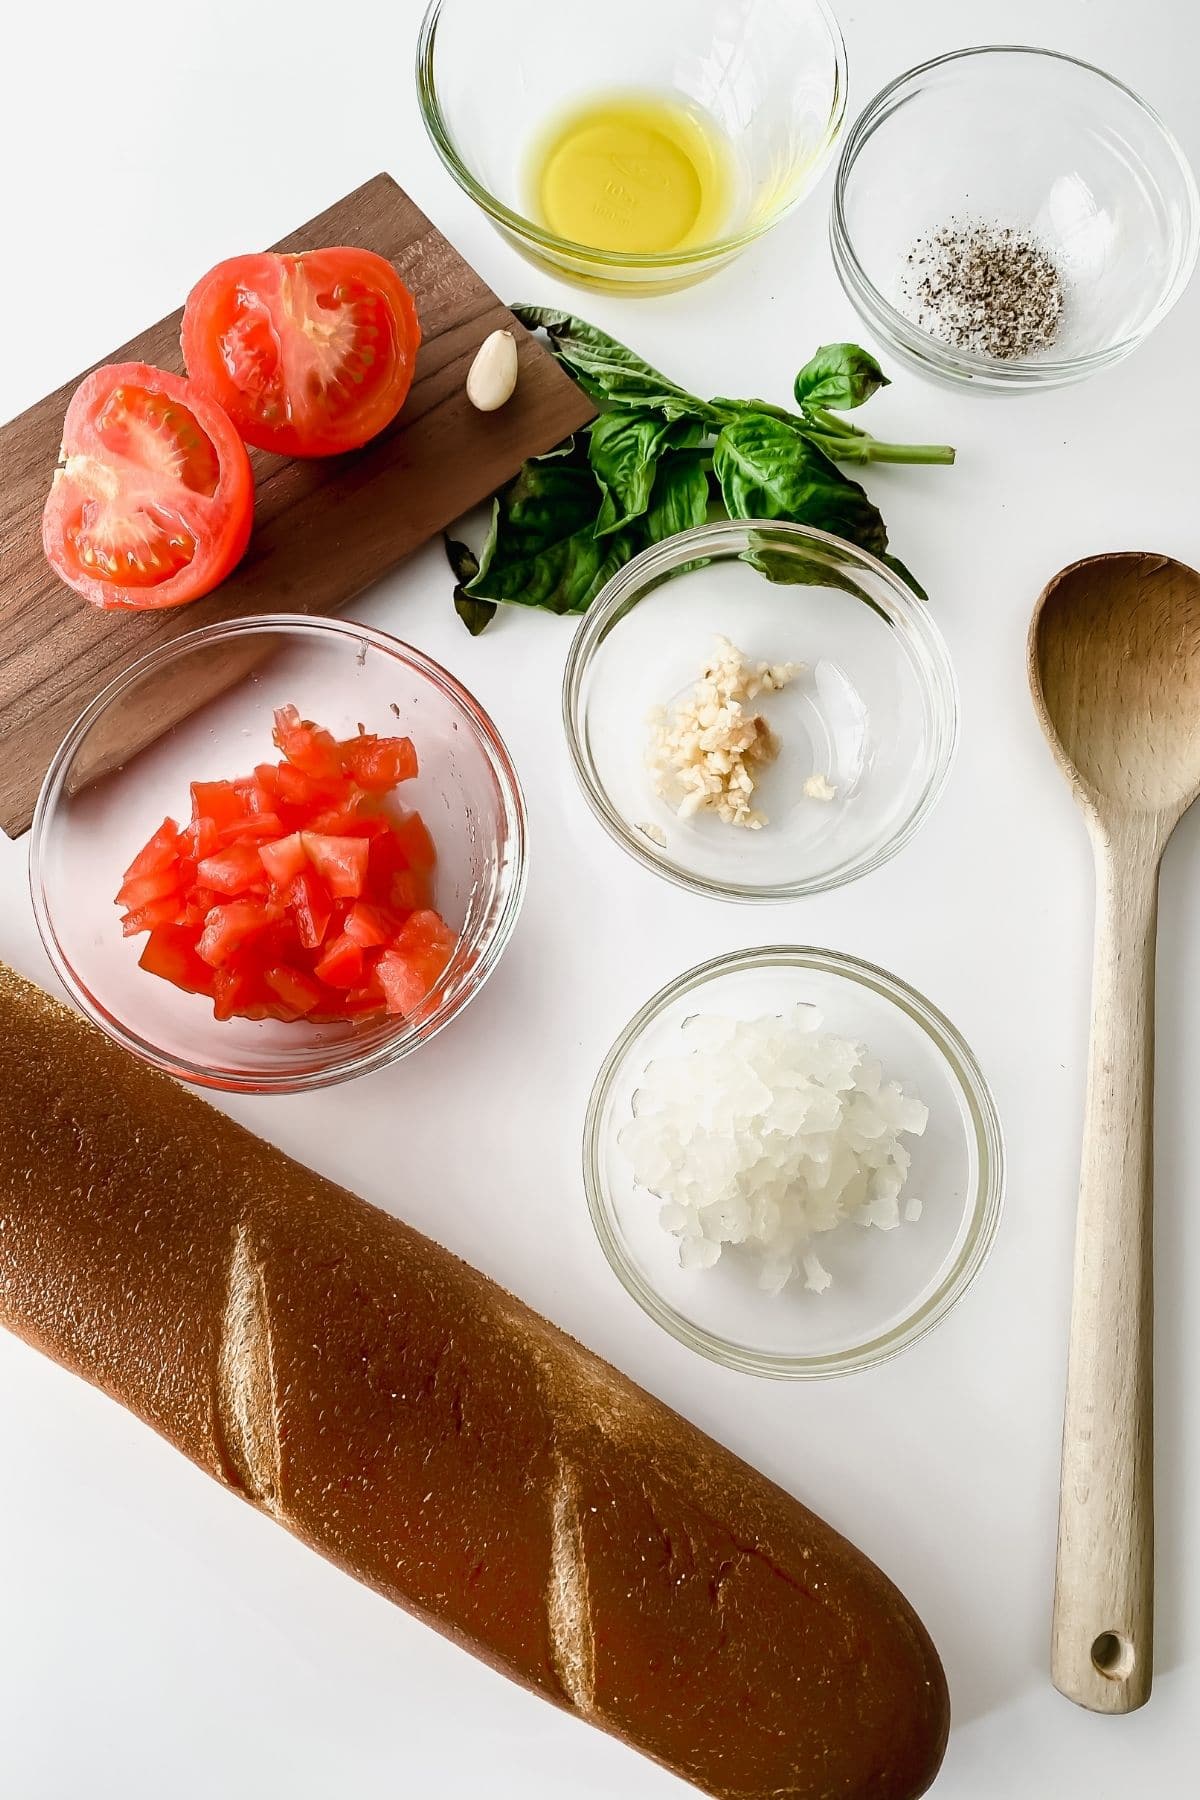 Ingredients for homemade bruschetta on white table